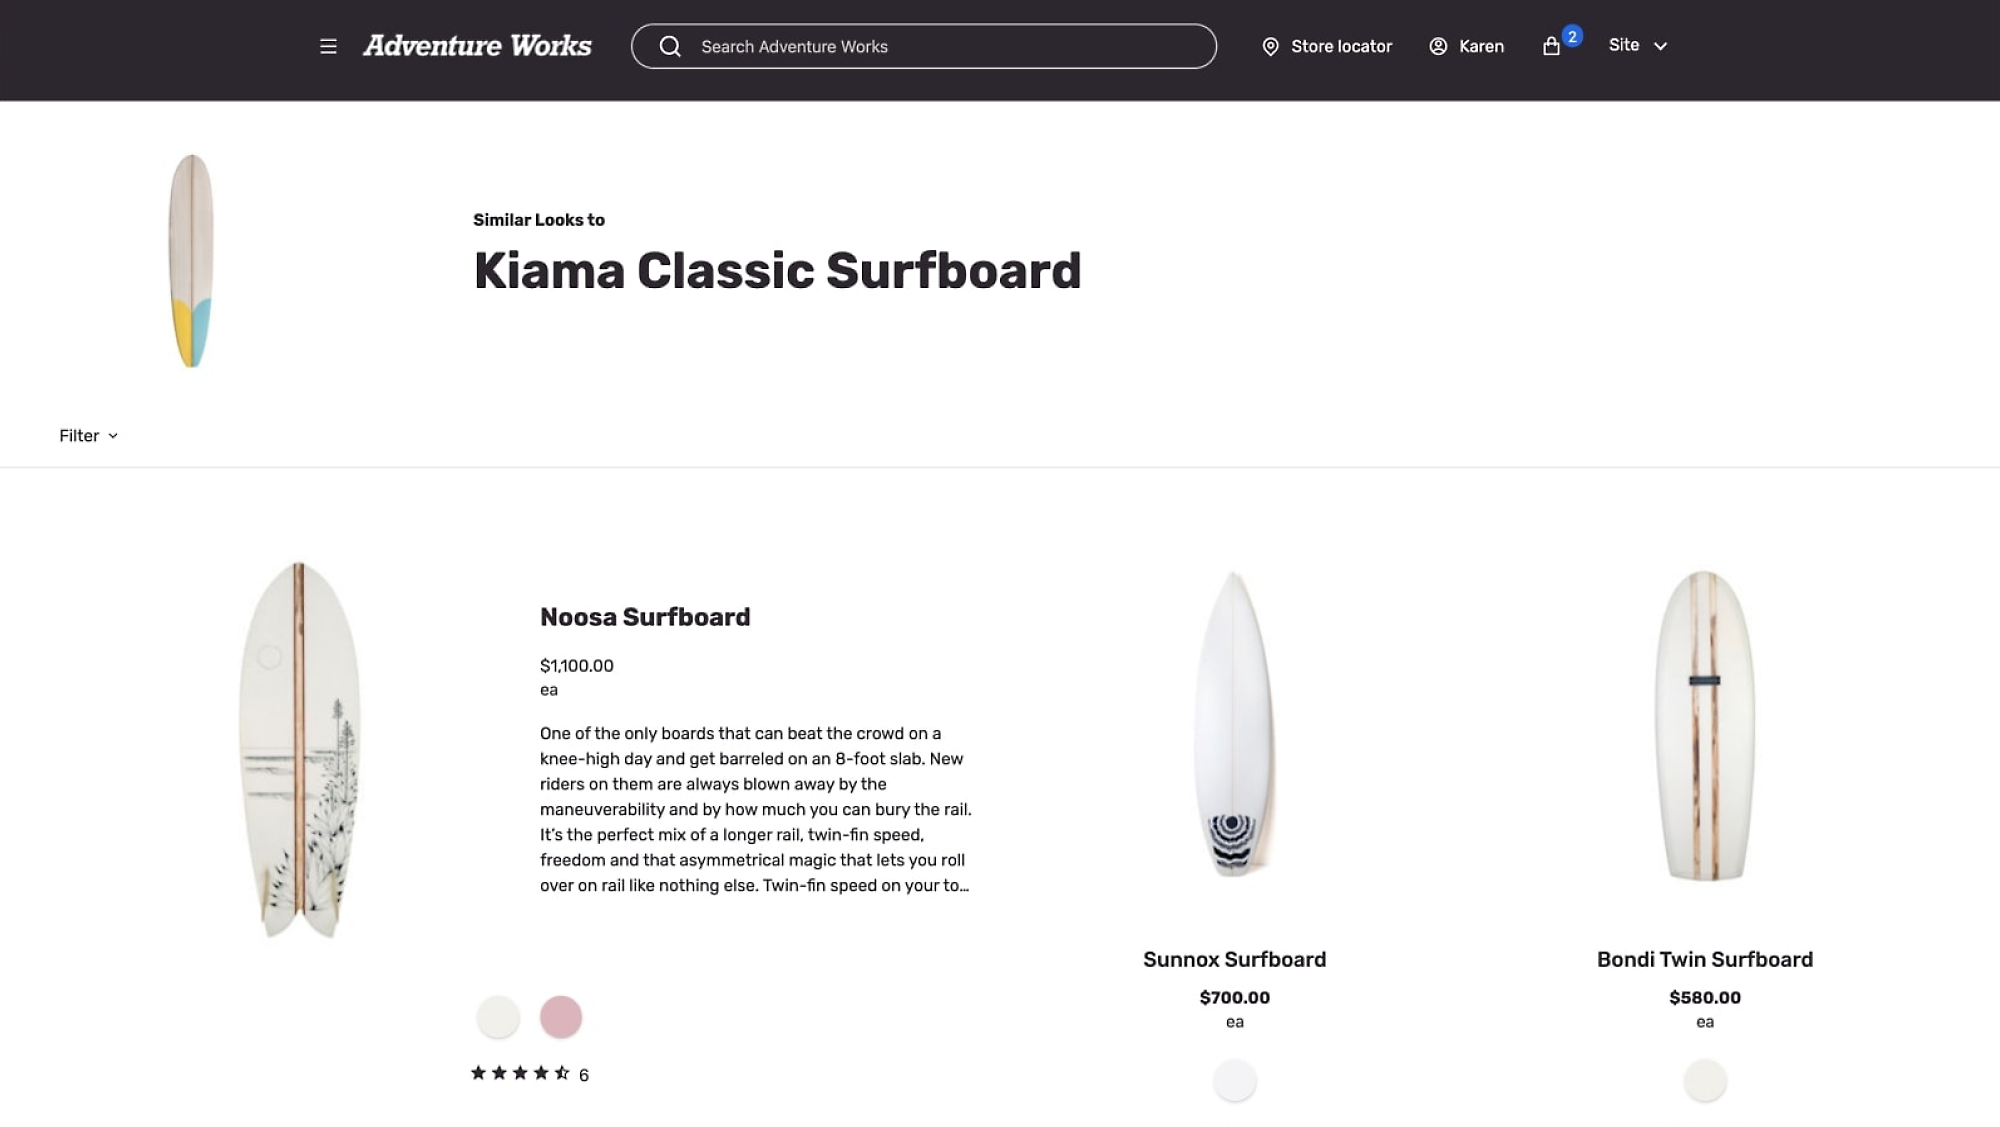 Listagens de surfboard da Adventure Works com preços: Surfboards Kiama Classic, Noosa, Sunnox e Bondi Twin